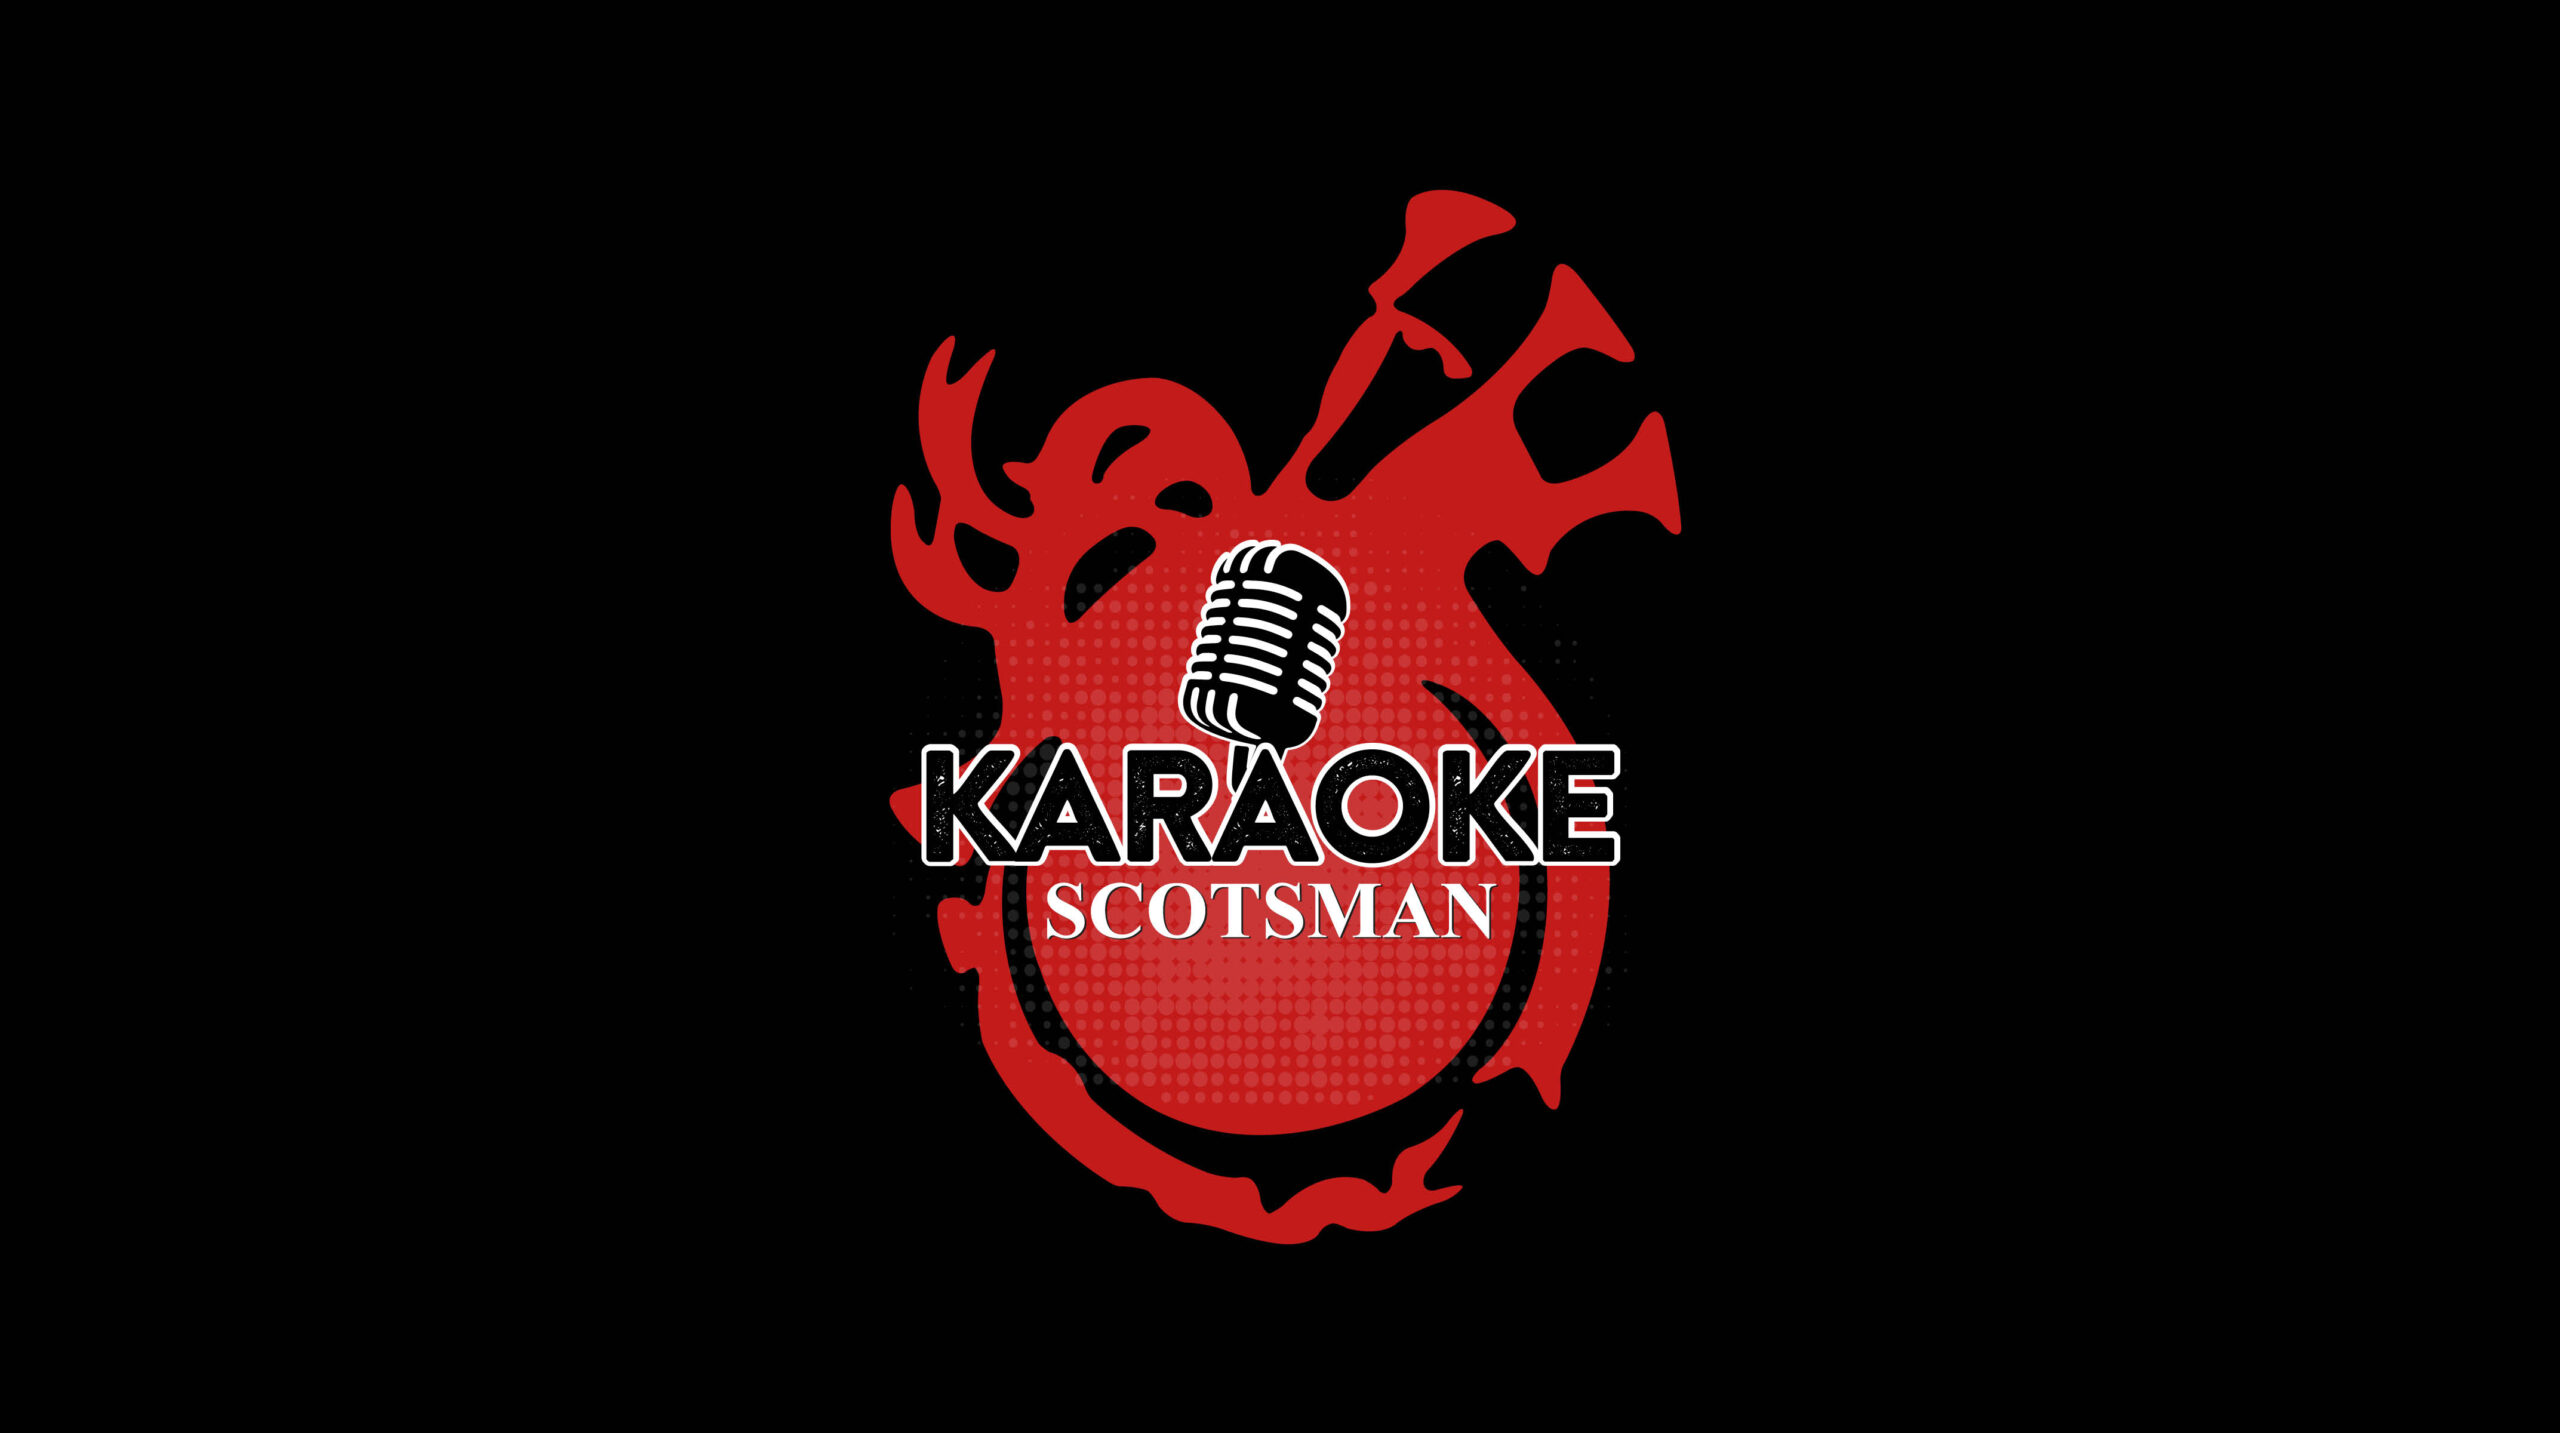 Karaoke Scotsman new logo